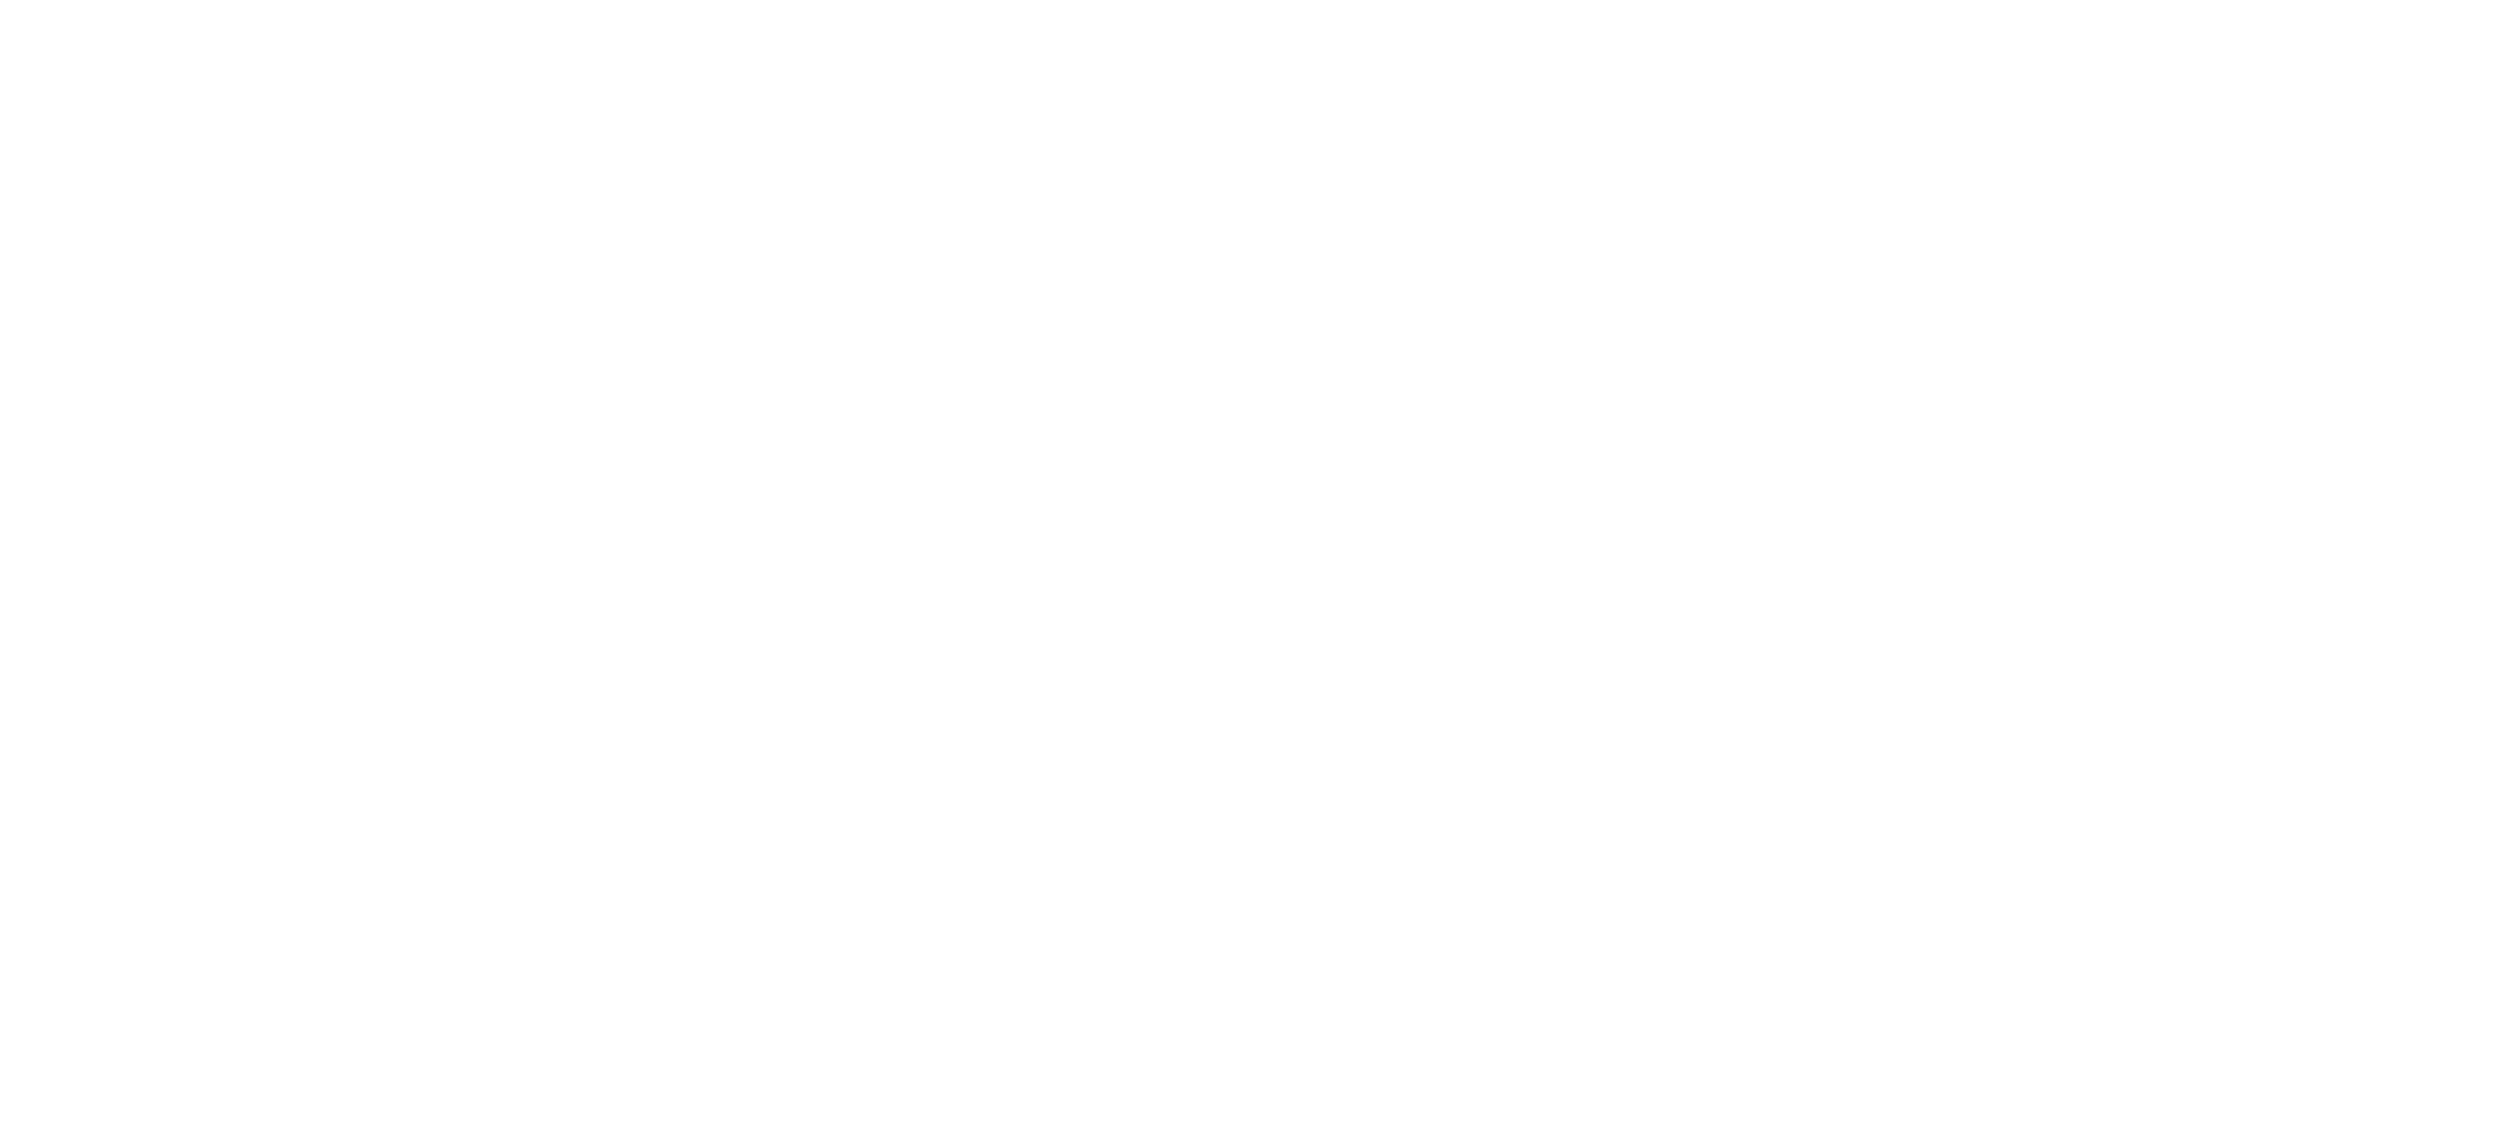 Newsnation